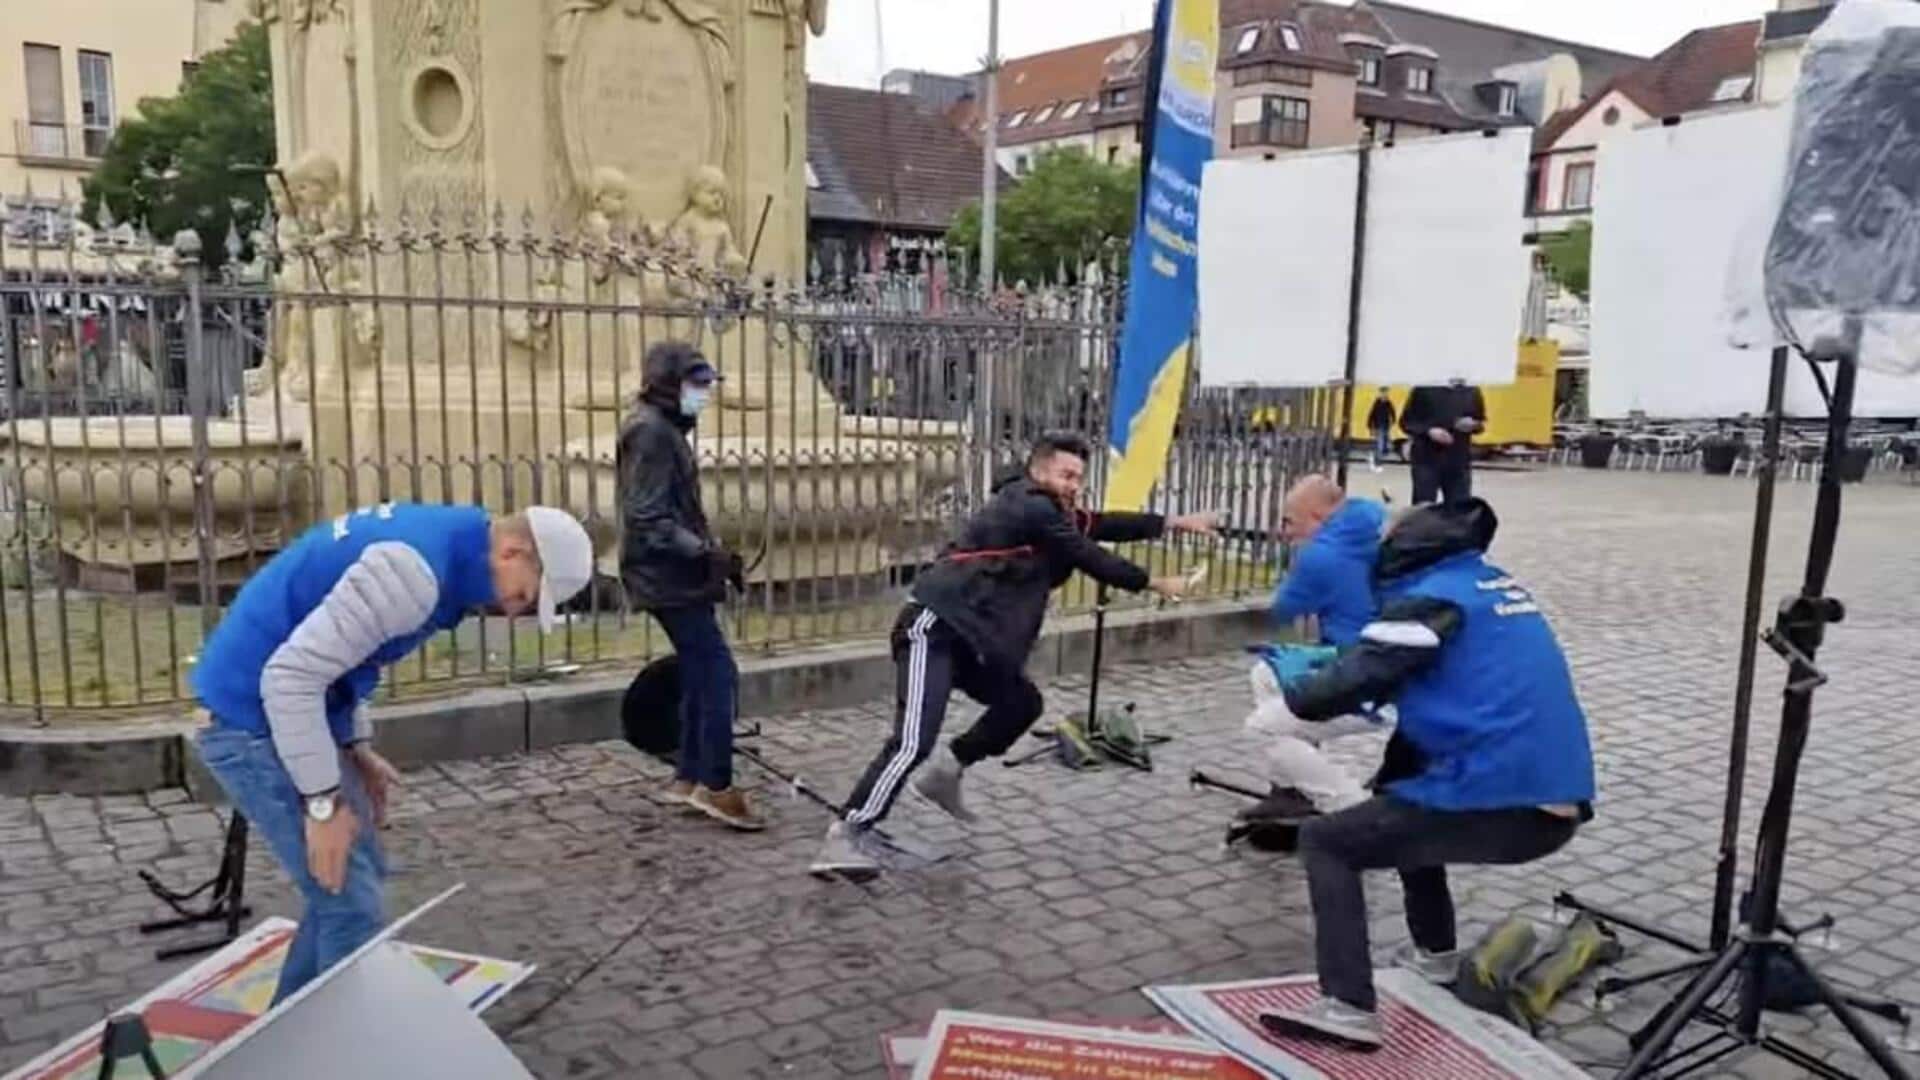 Video: Knifeman stabs multiple people at anti-Islam rally in Germany 